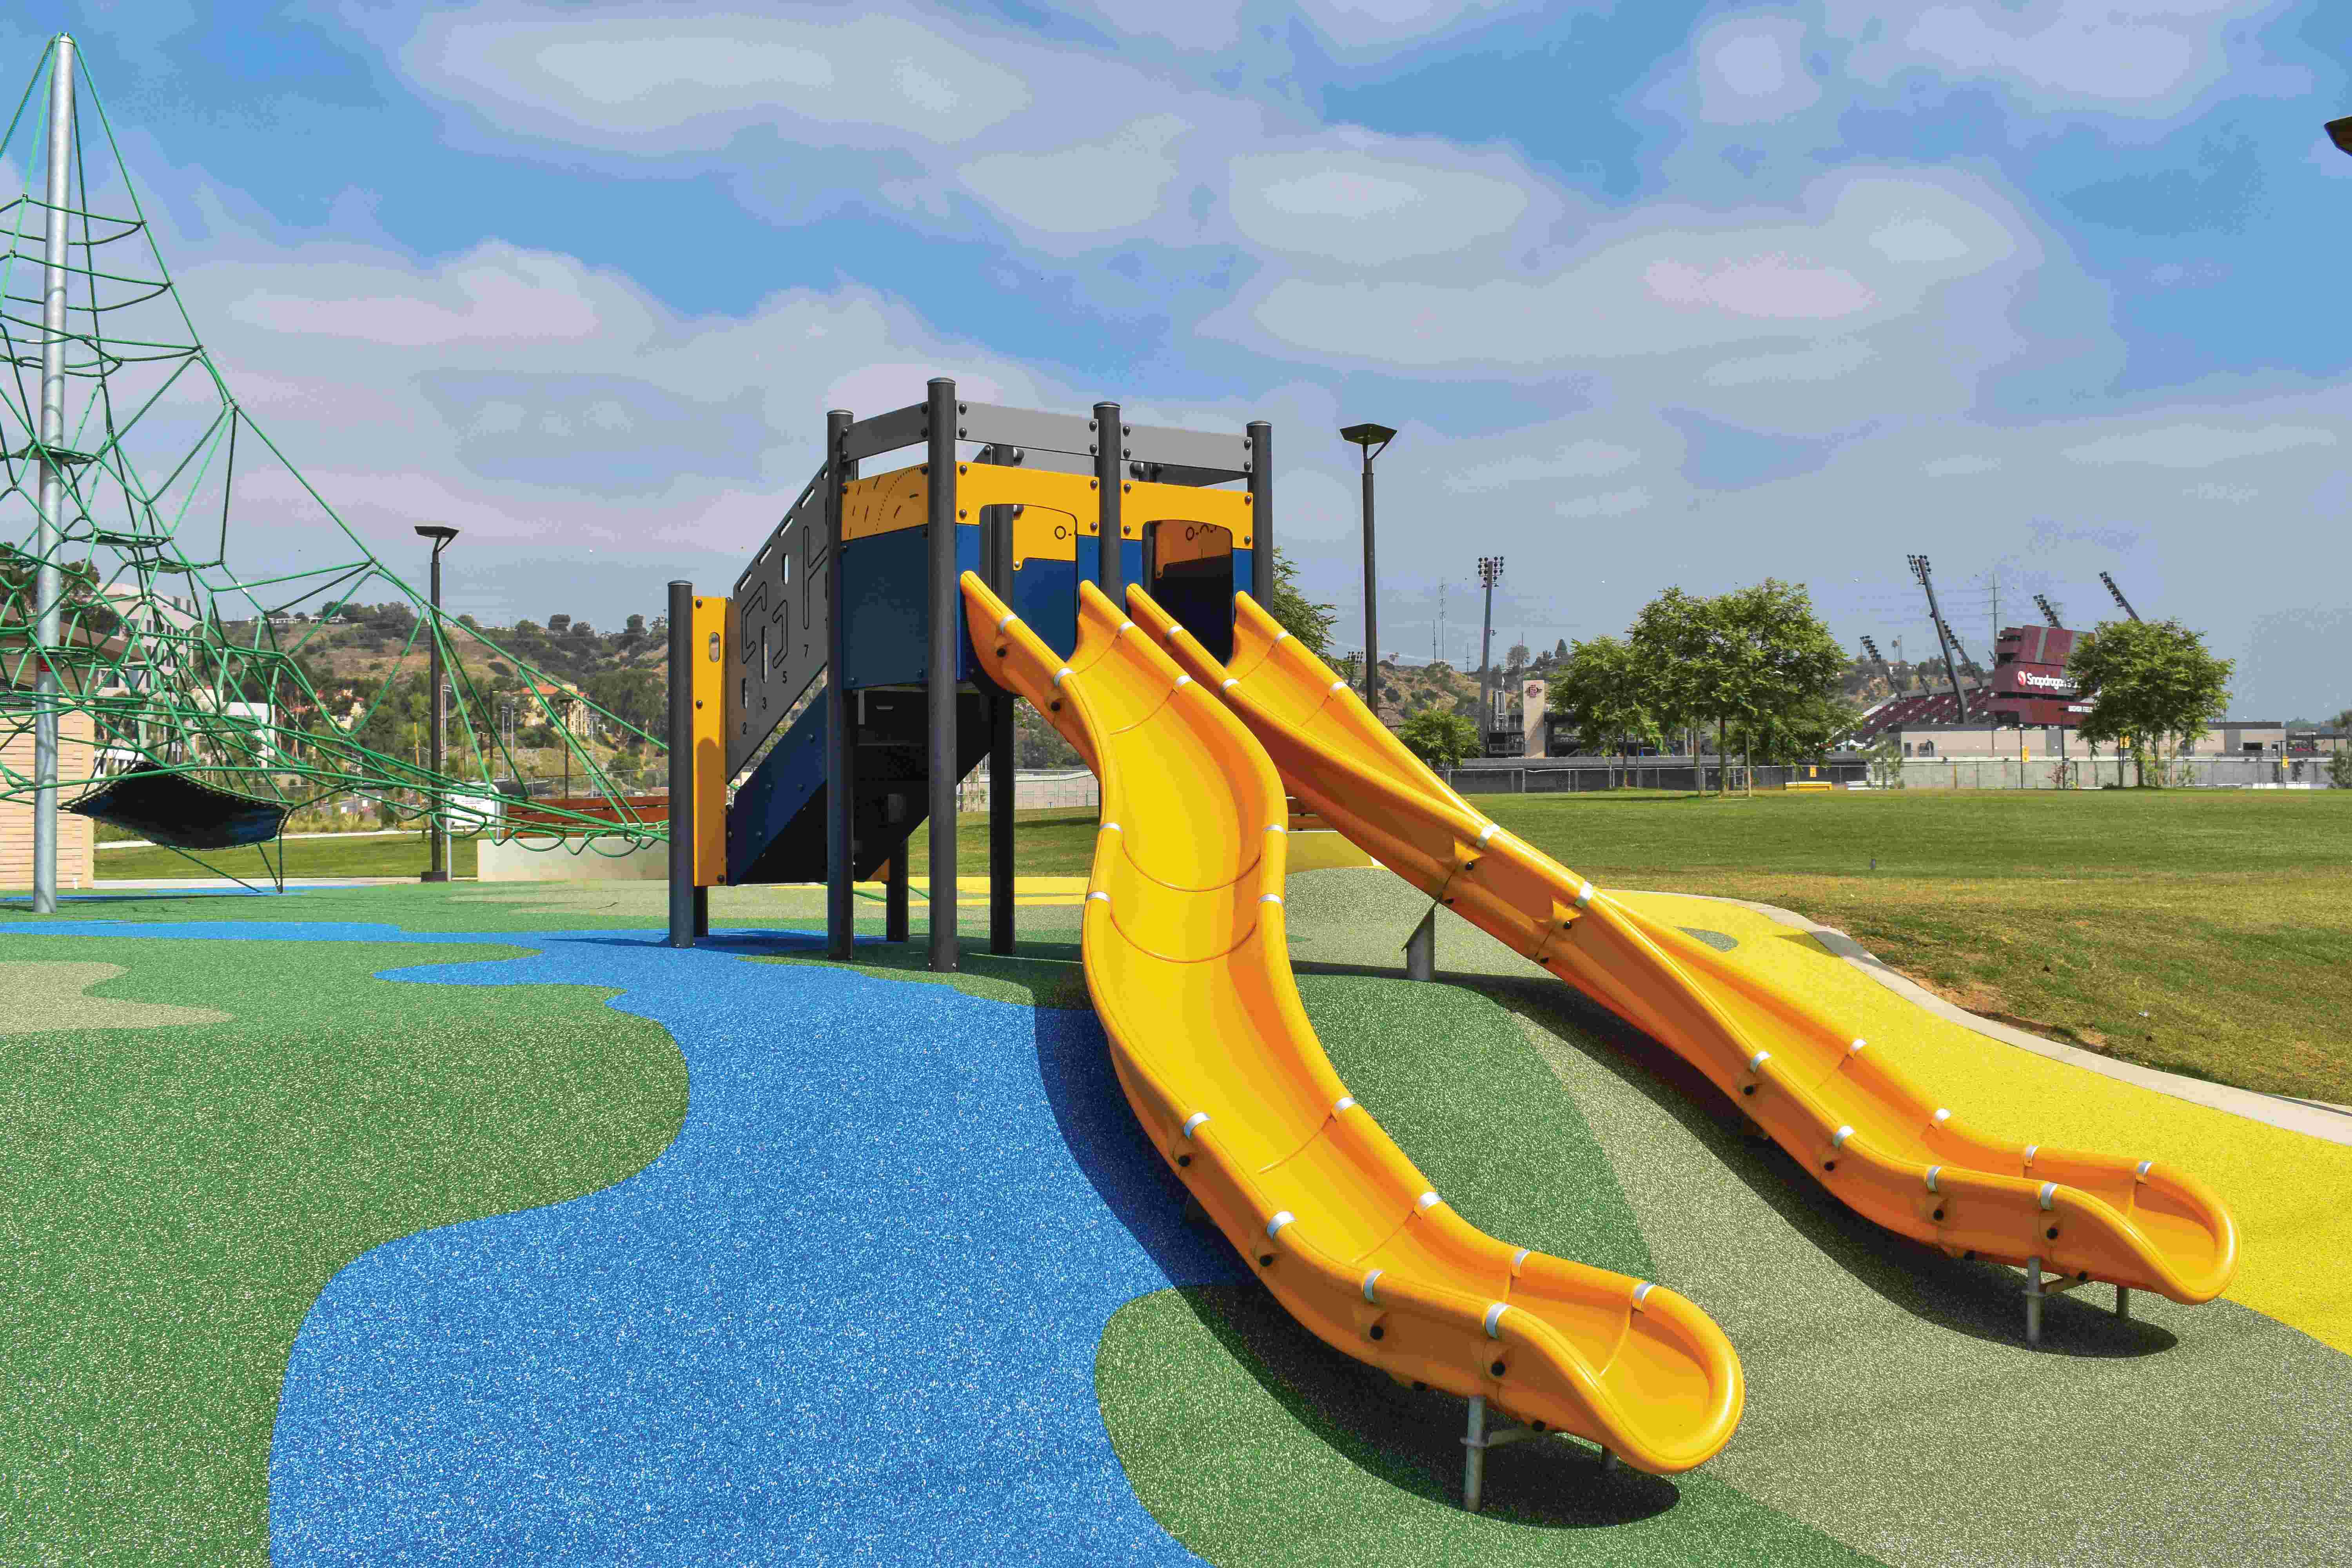 Slides in the playground